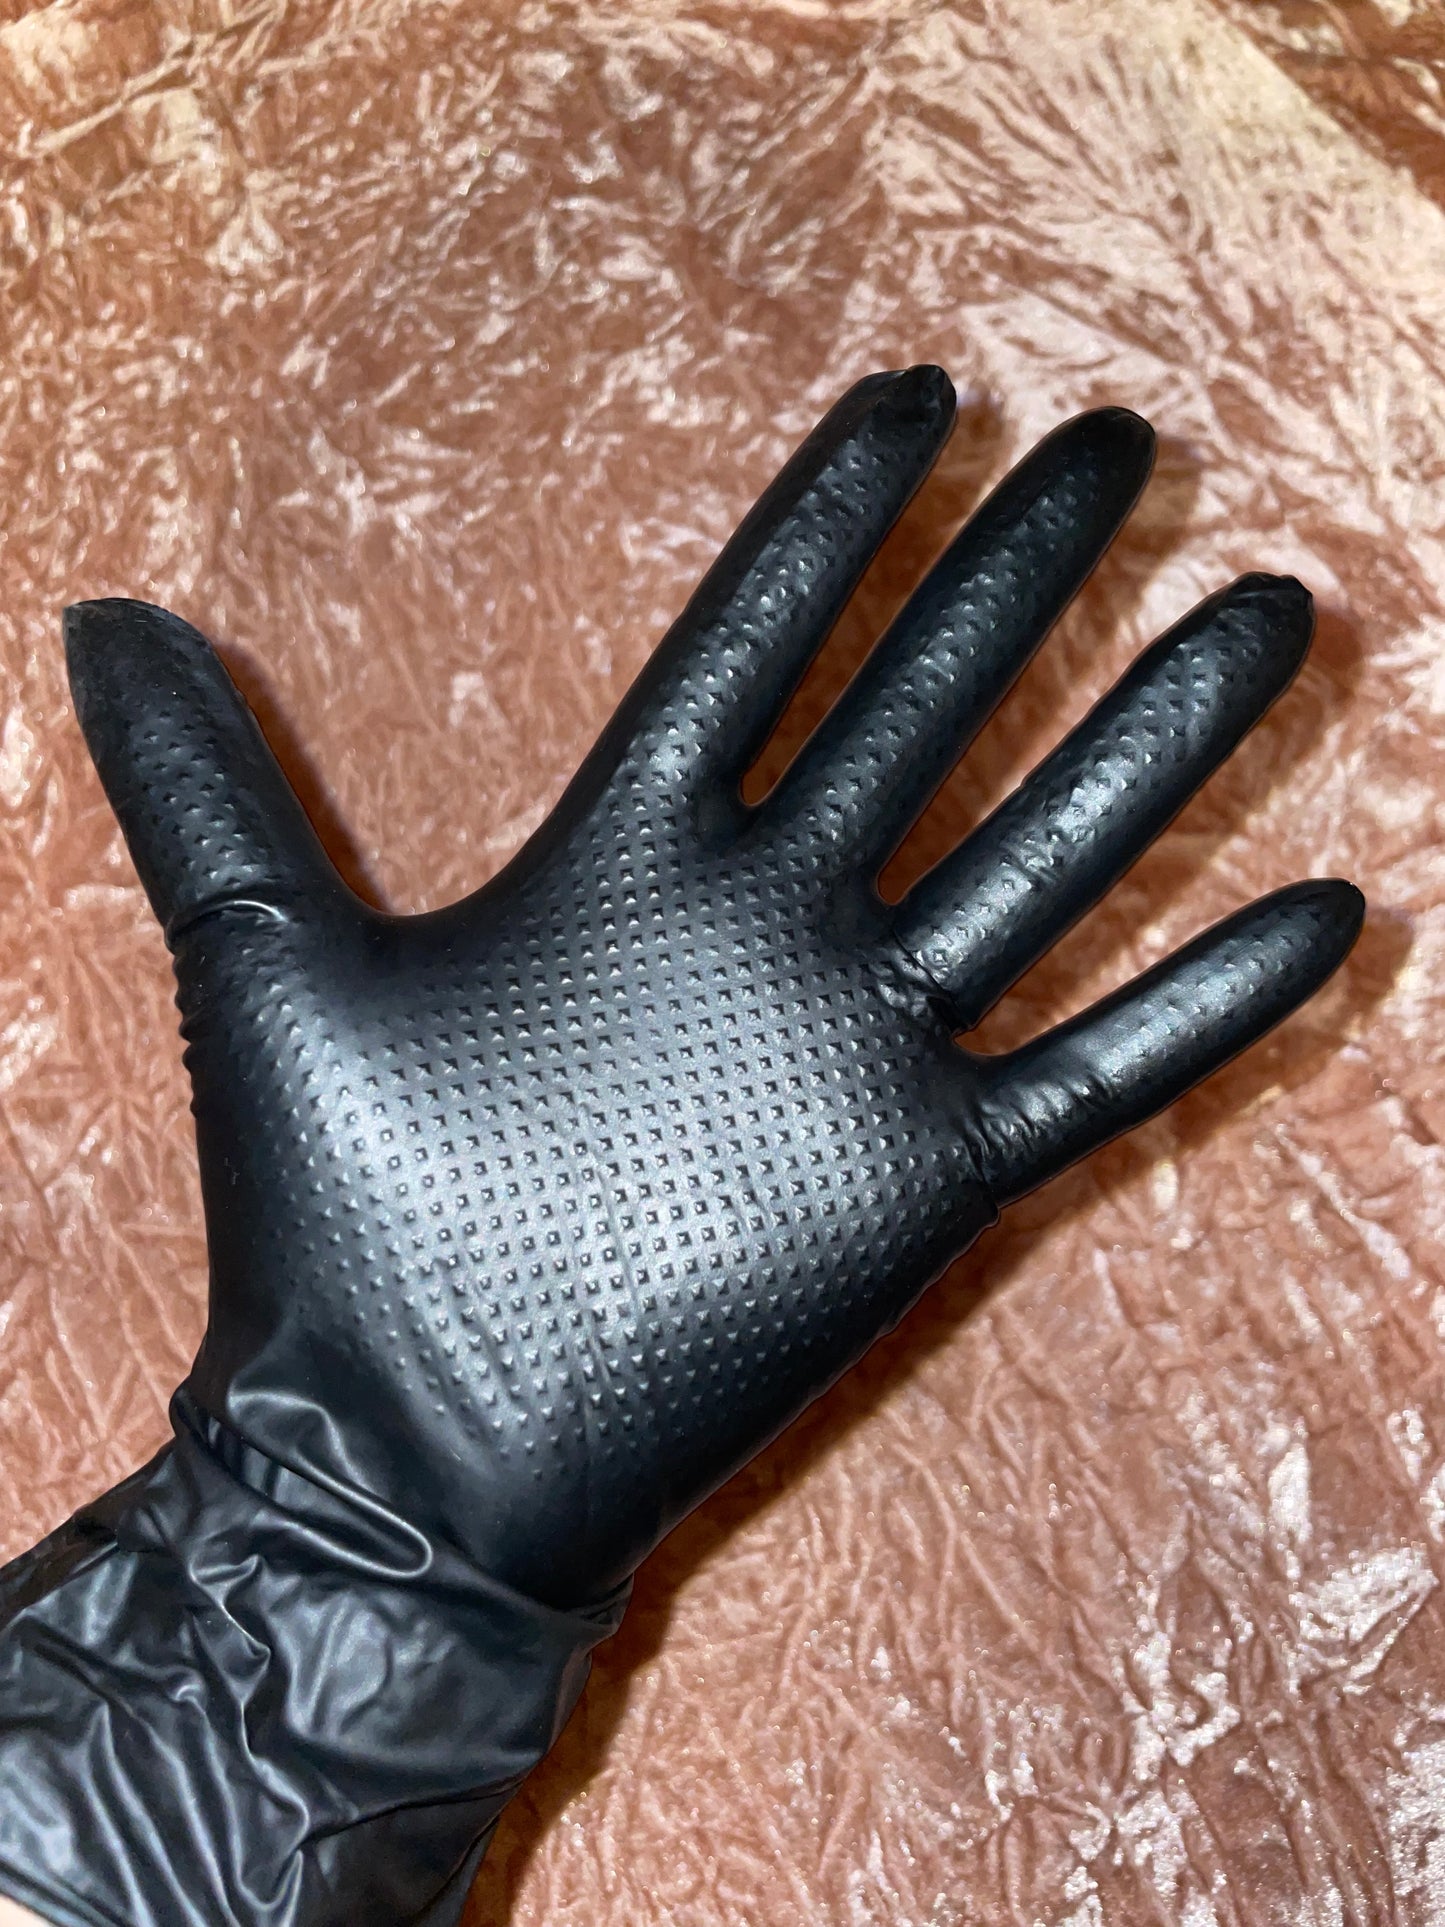 Black Nitrile Gloves XL